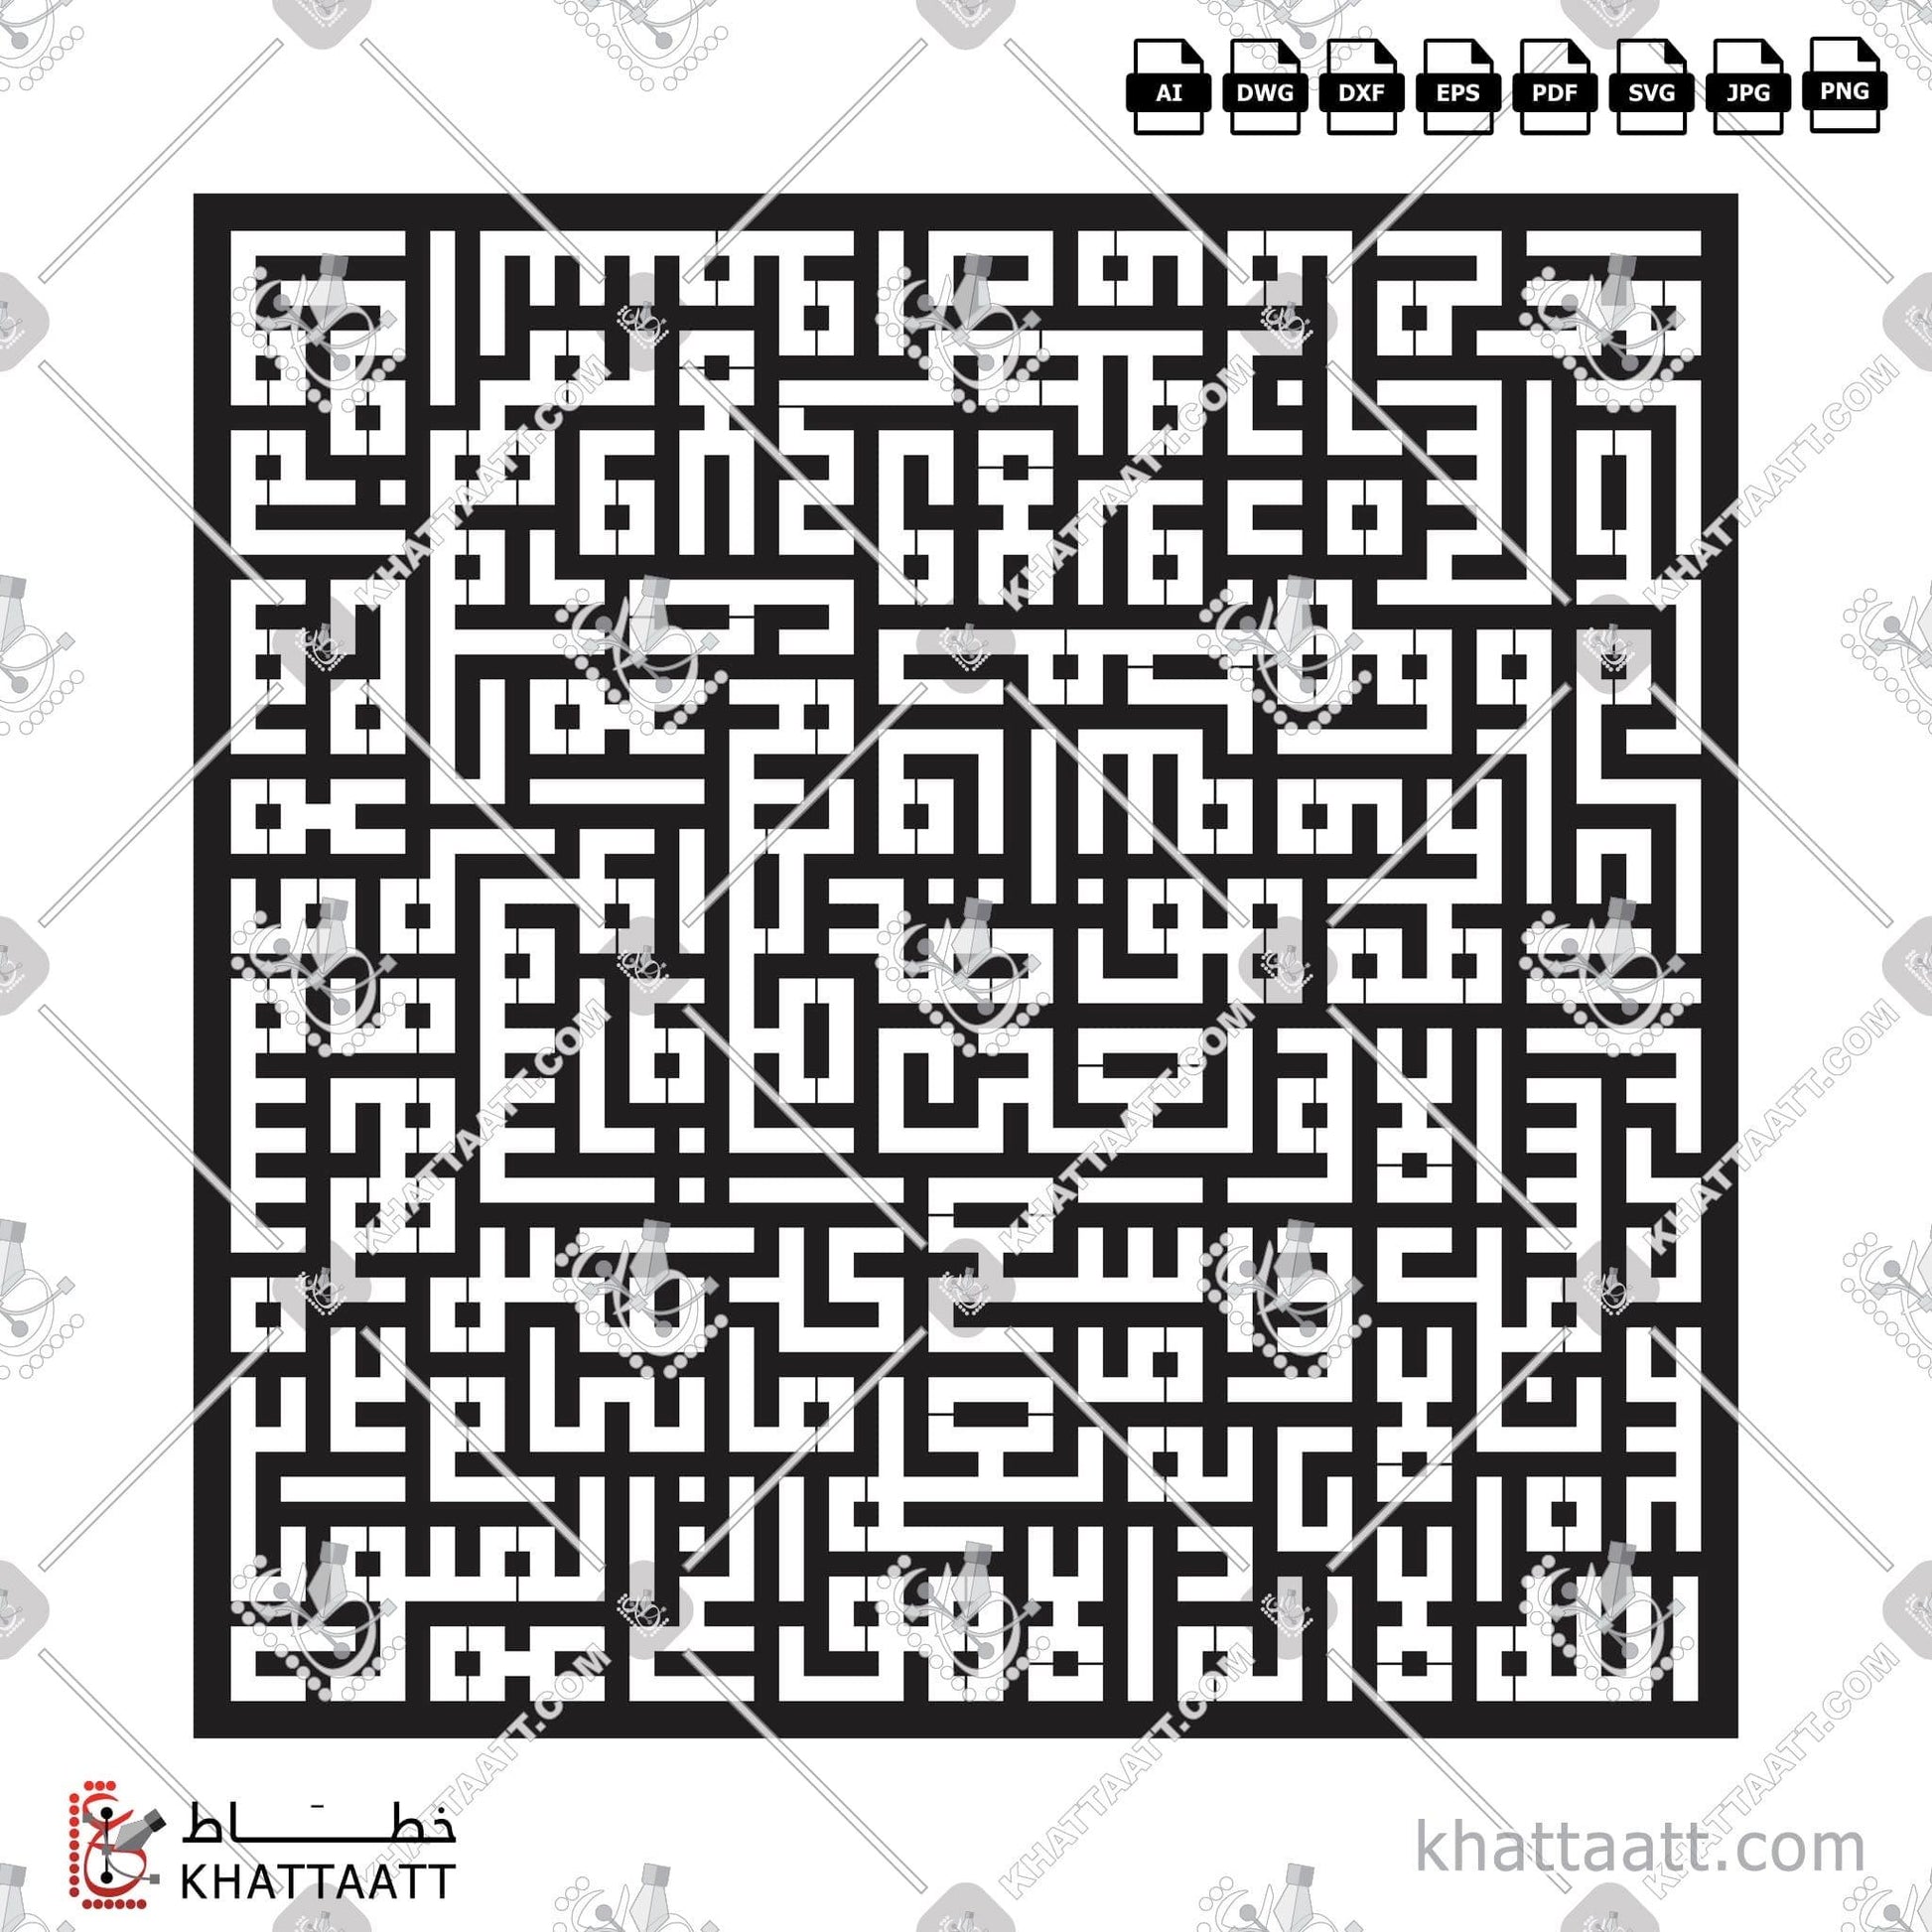 Download Arabic Calligraphy of Ayatul Kursi - آية الكرسي in Kufi - الخط الكوفي in vector and .png